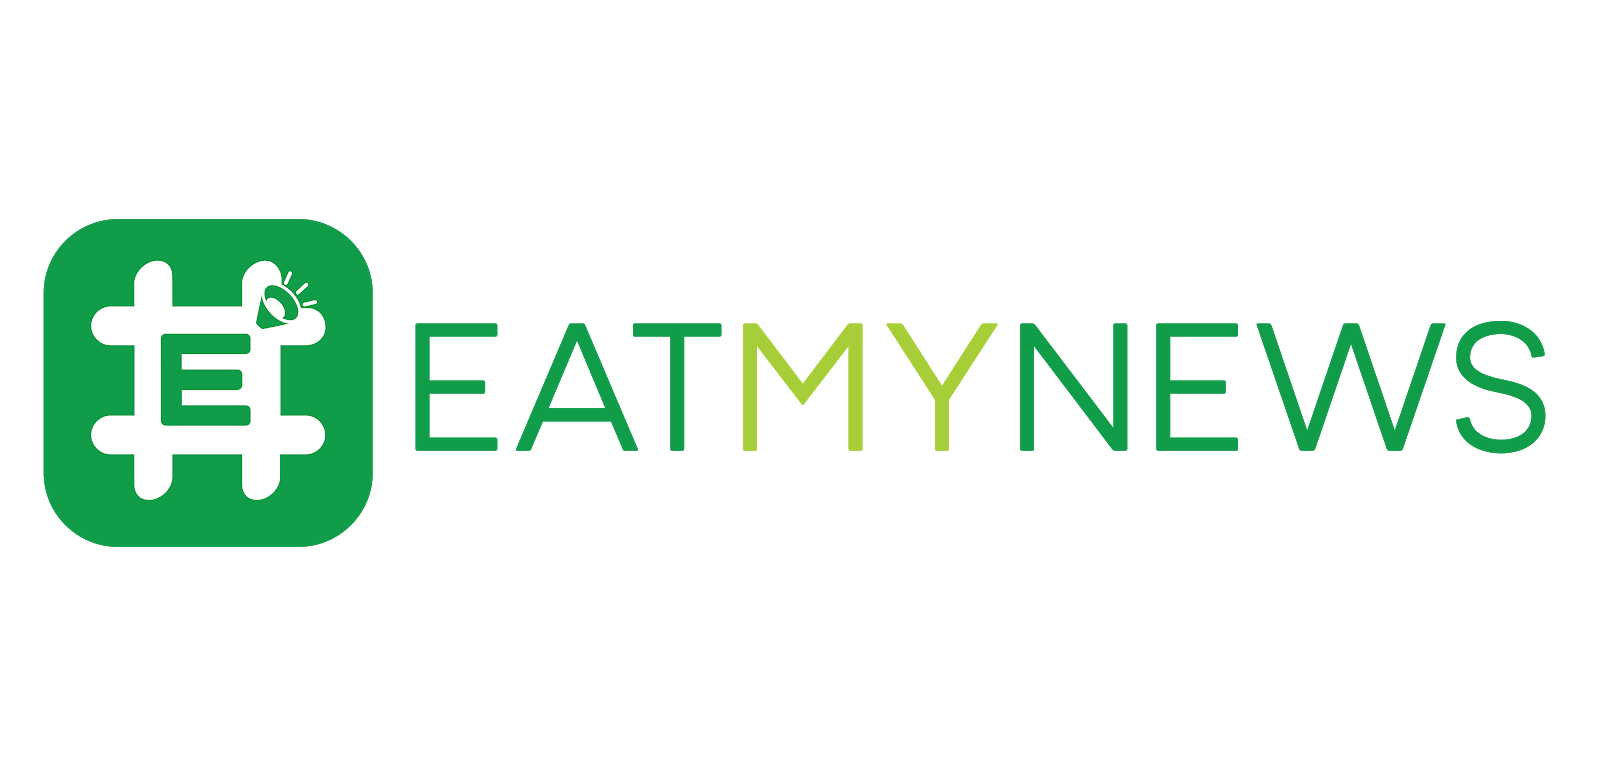 Eatmynews GPS Software